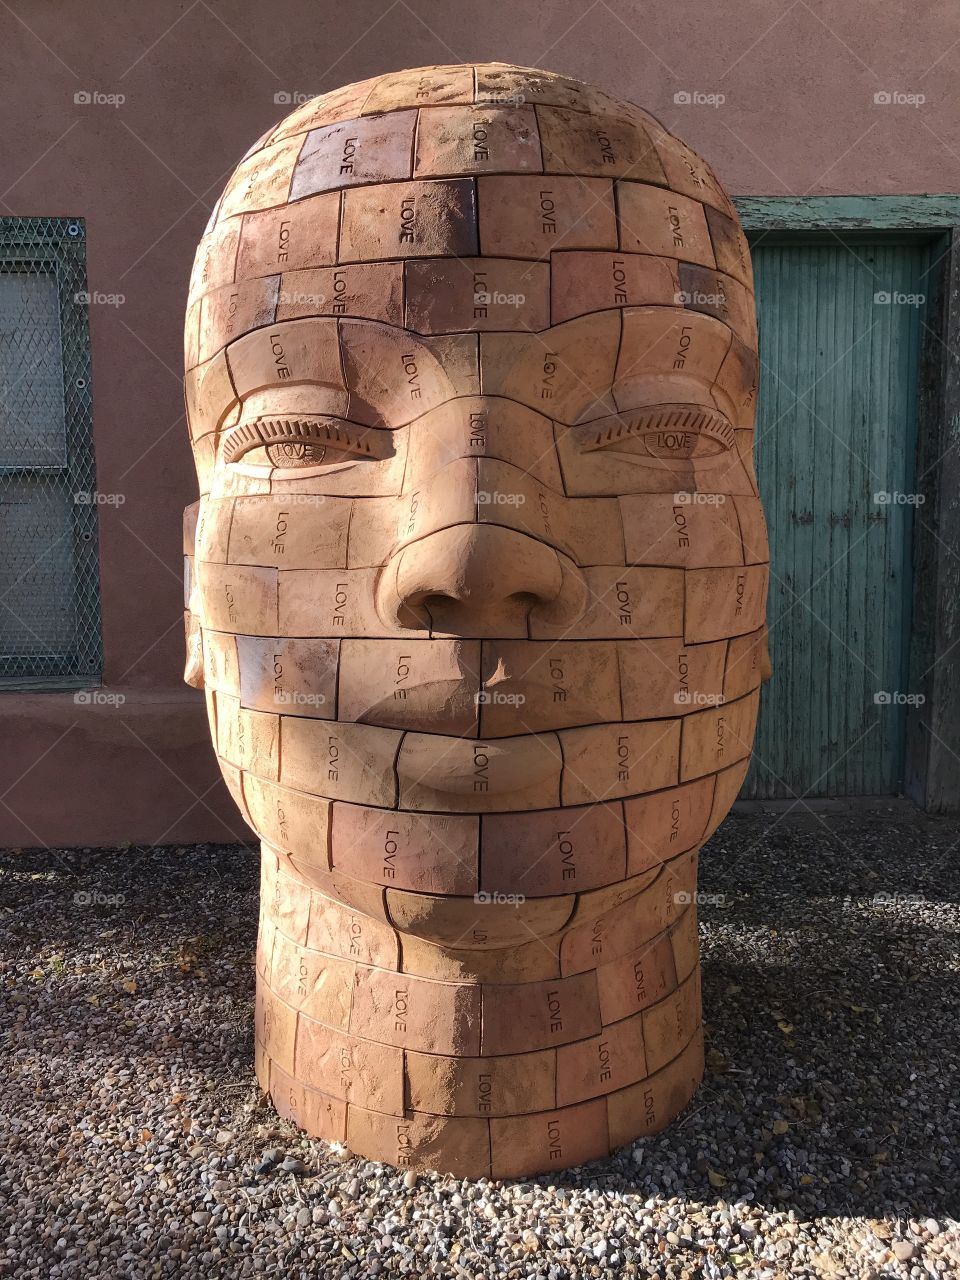 Canyon Road Art Gallery in Santa Fe, “Love” sculpture